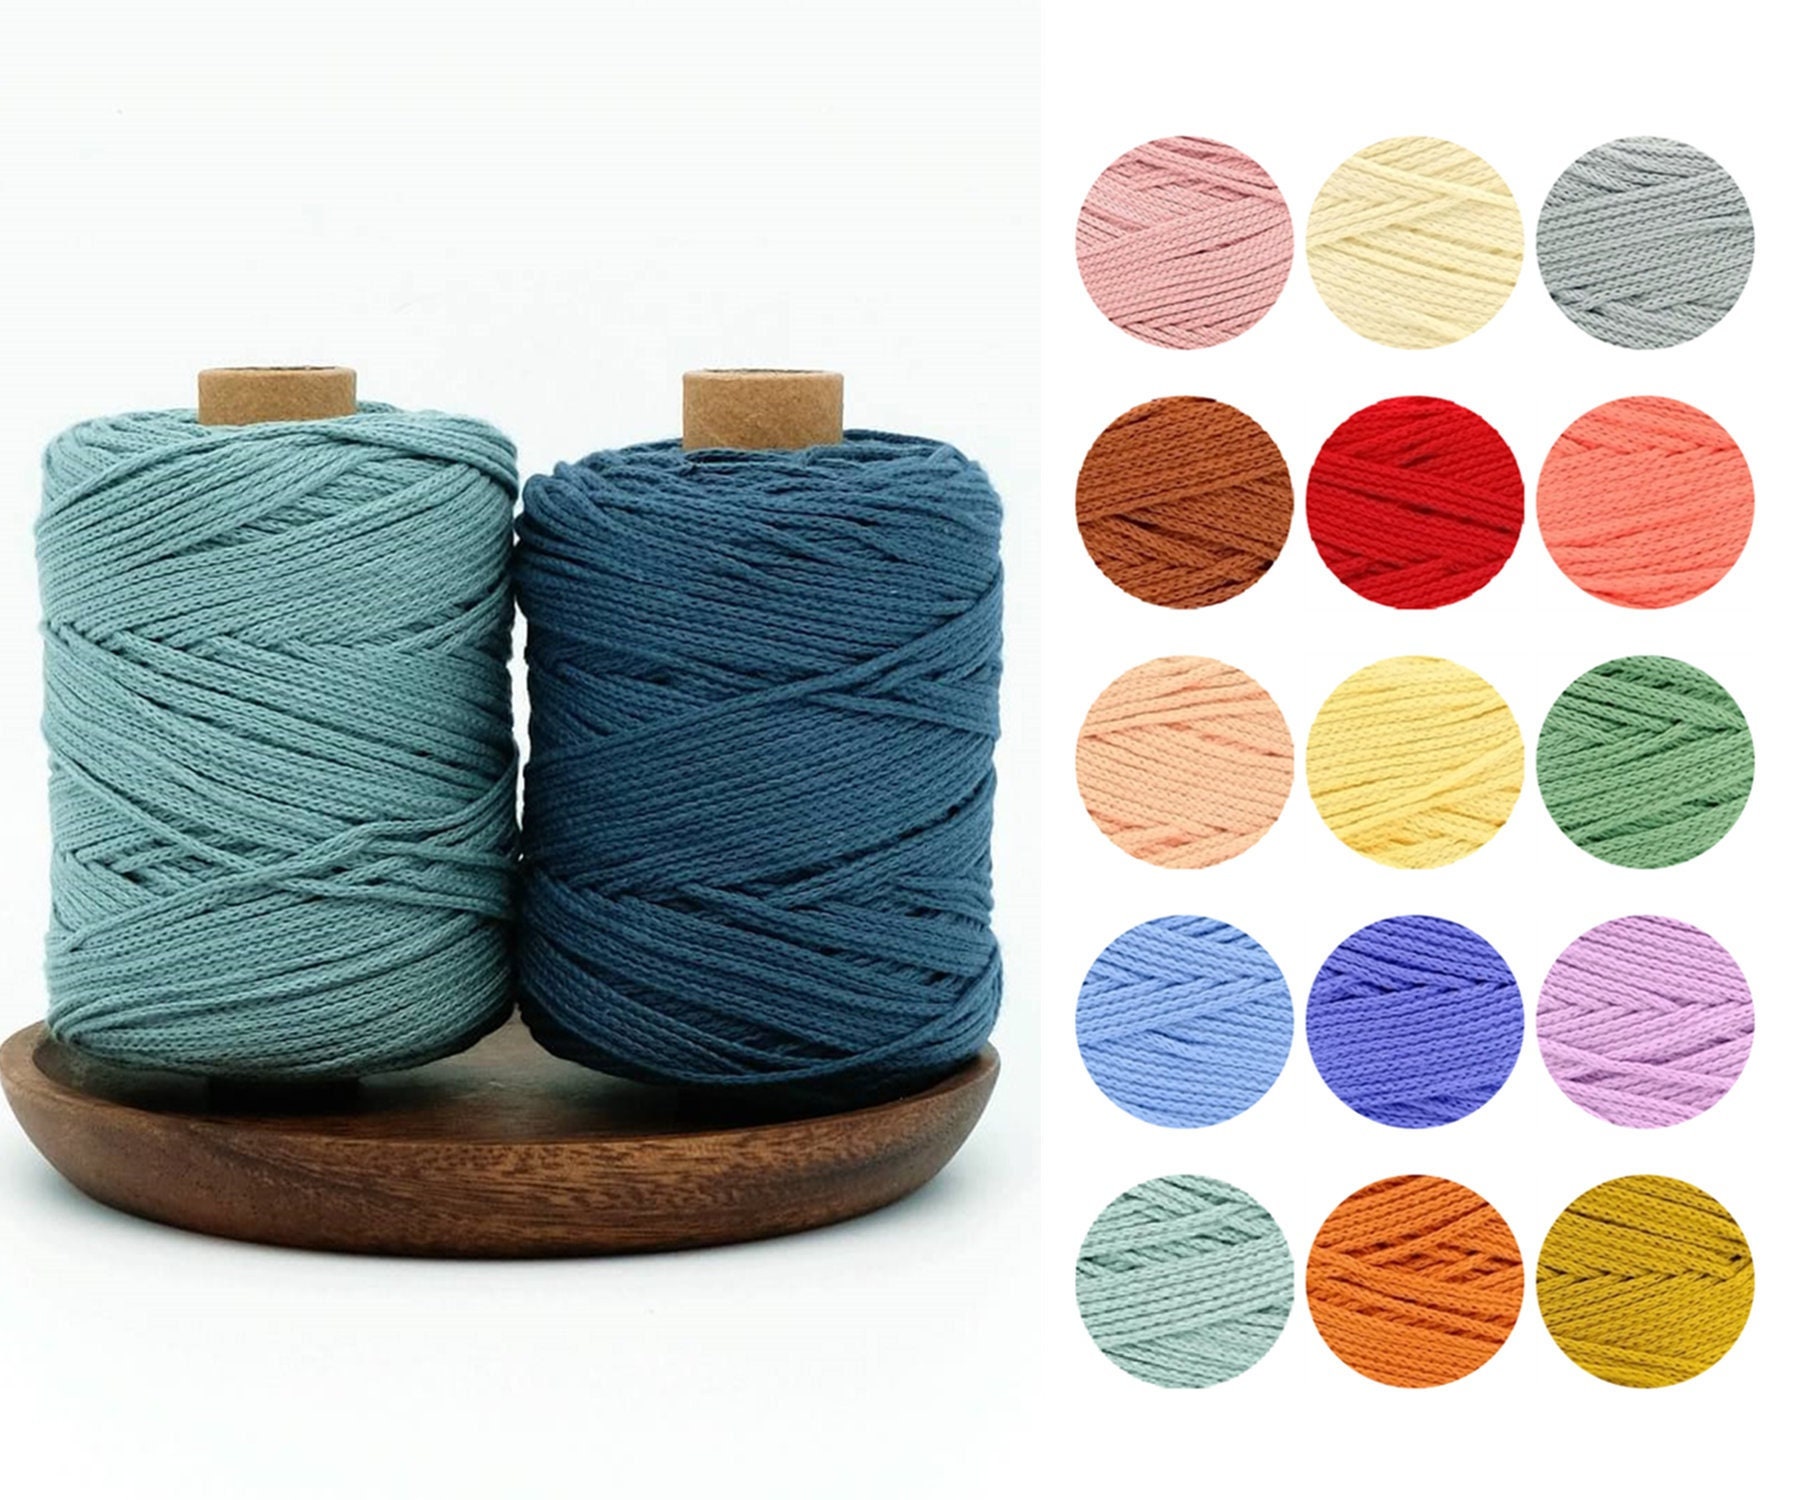 Likeecords 100% Cotton Crochet Yarn for Bag,2mm, 150m,Macrame Cord